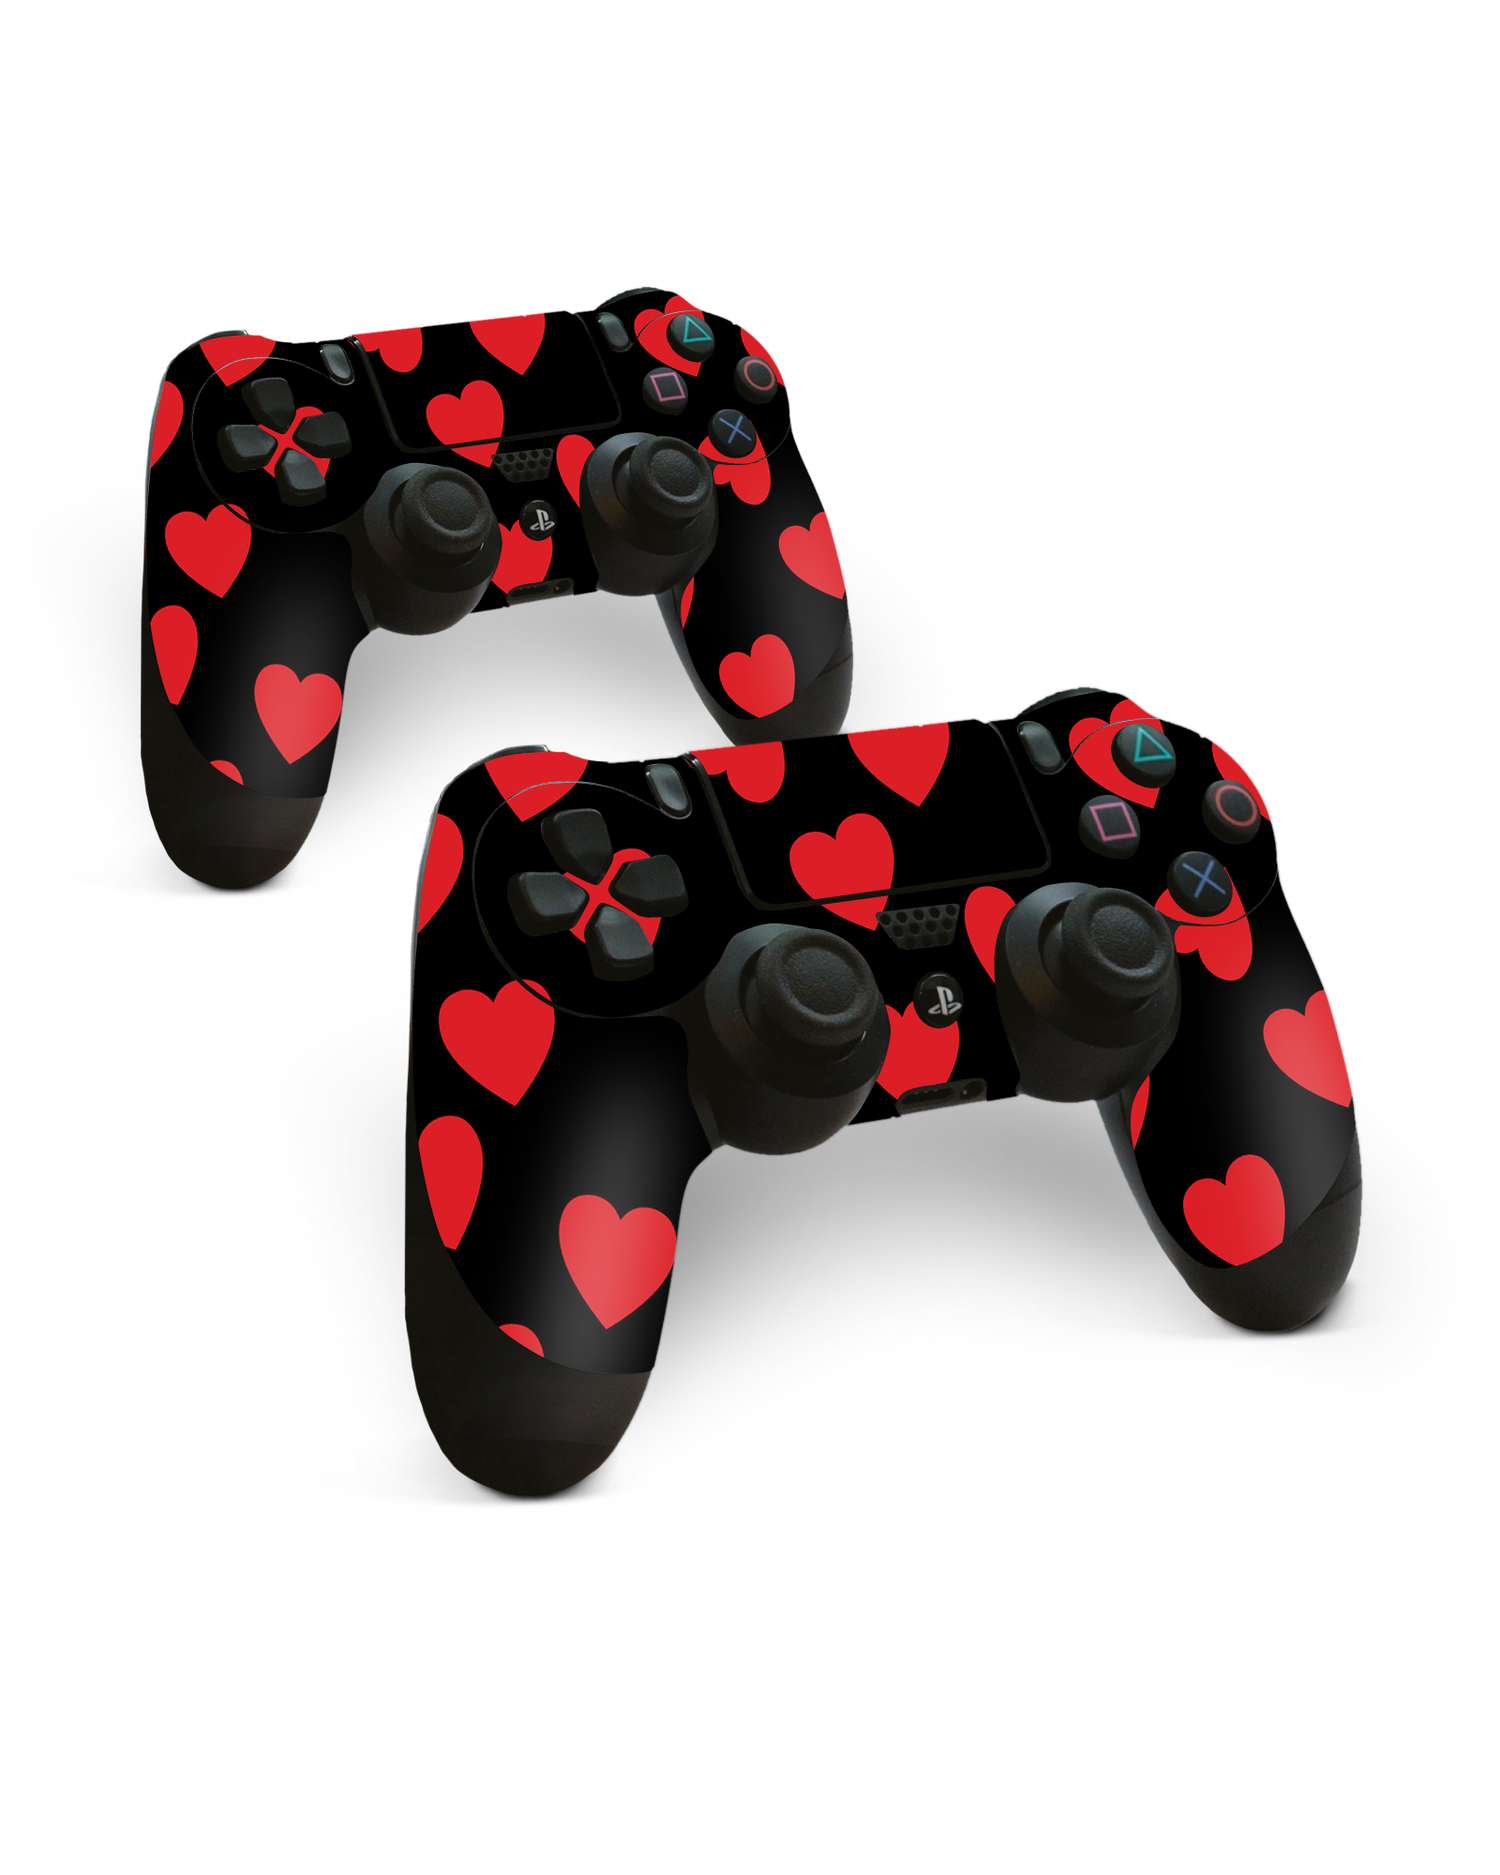 Repeating Hearts Konsolen Aufkleber für Sony PlayStation 4 Controller: Frontansicht